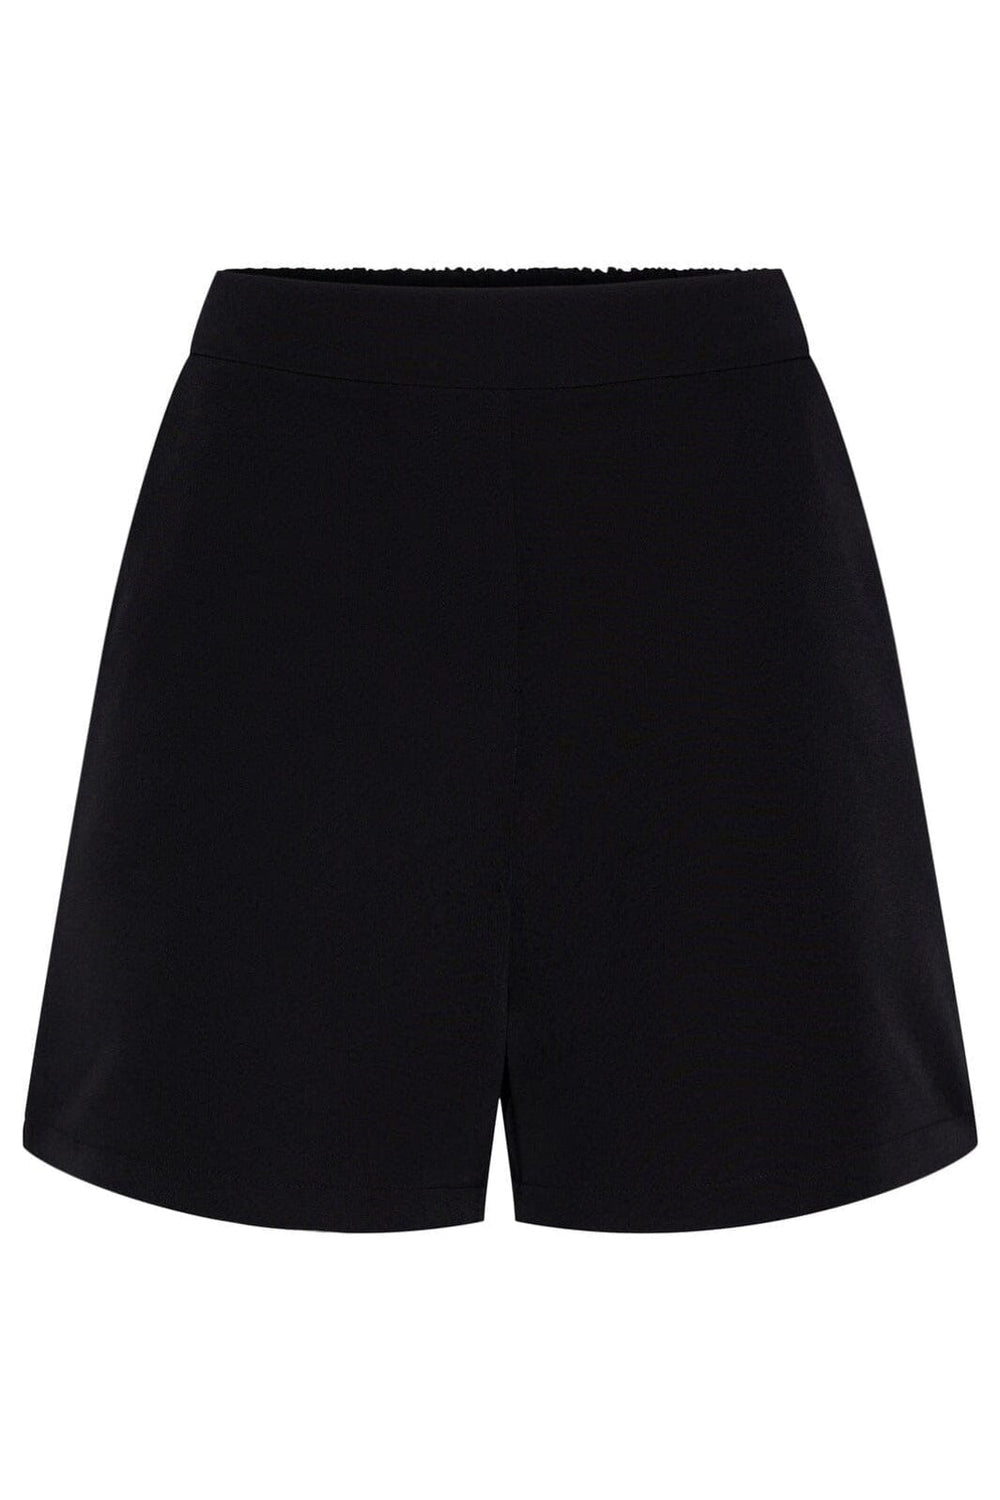 Pieces - Pcbossy Shorts - 4394620 Black Shorts 